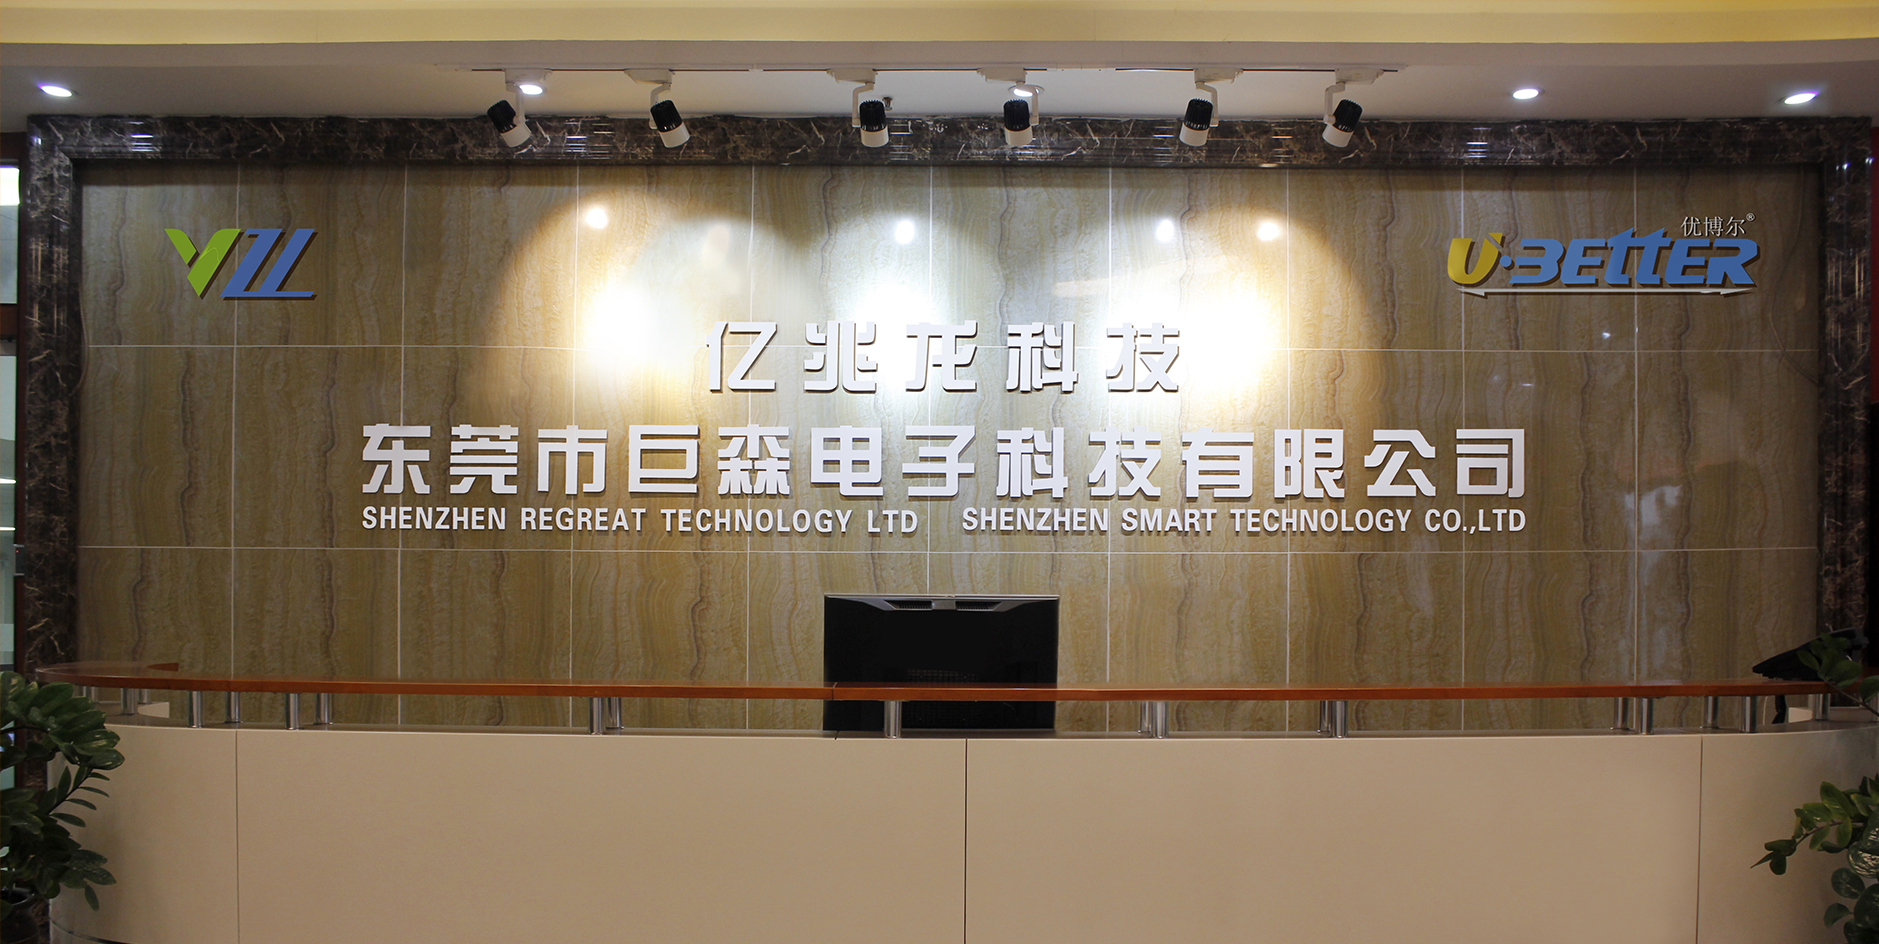 Shenzhen Yizhaolong Technology Co. LTD